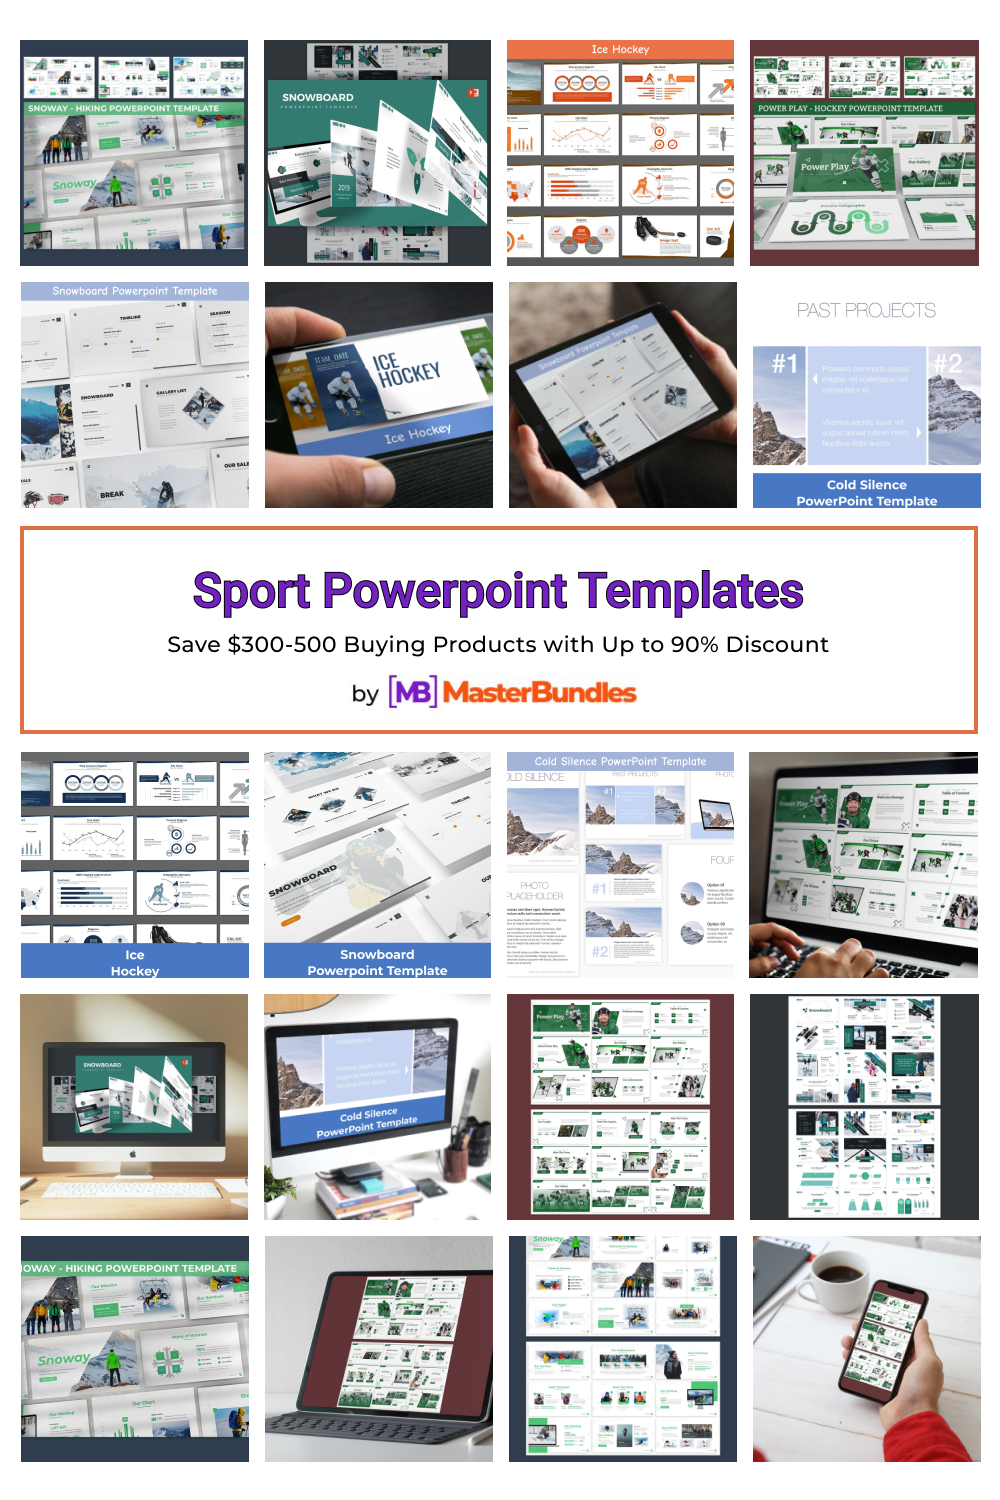 sport powerpoint templates pinterest image.